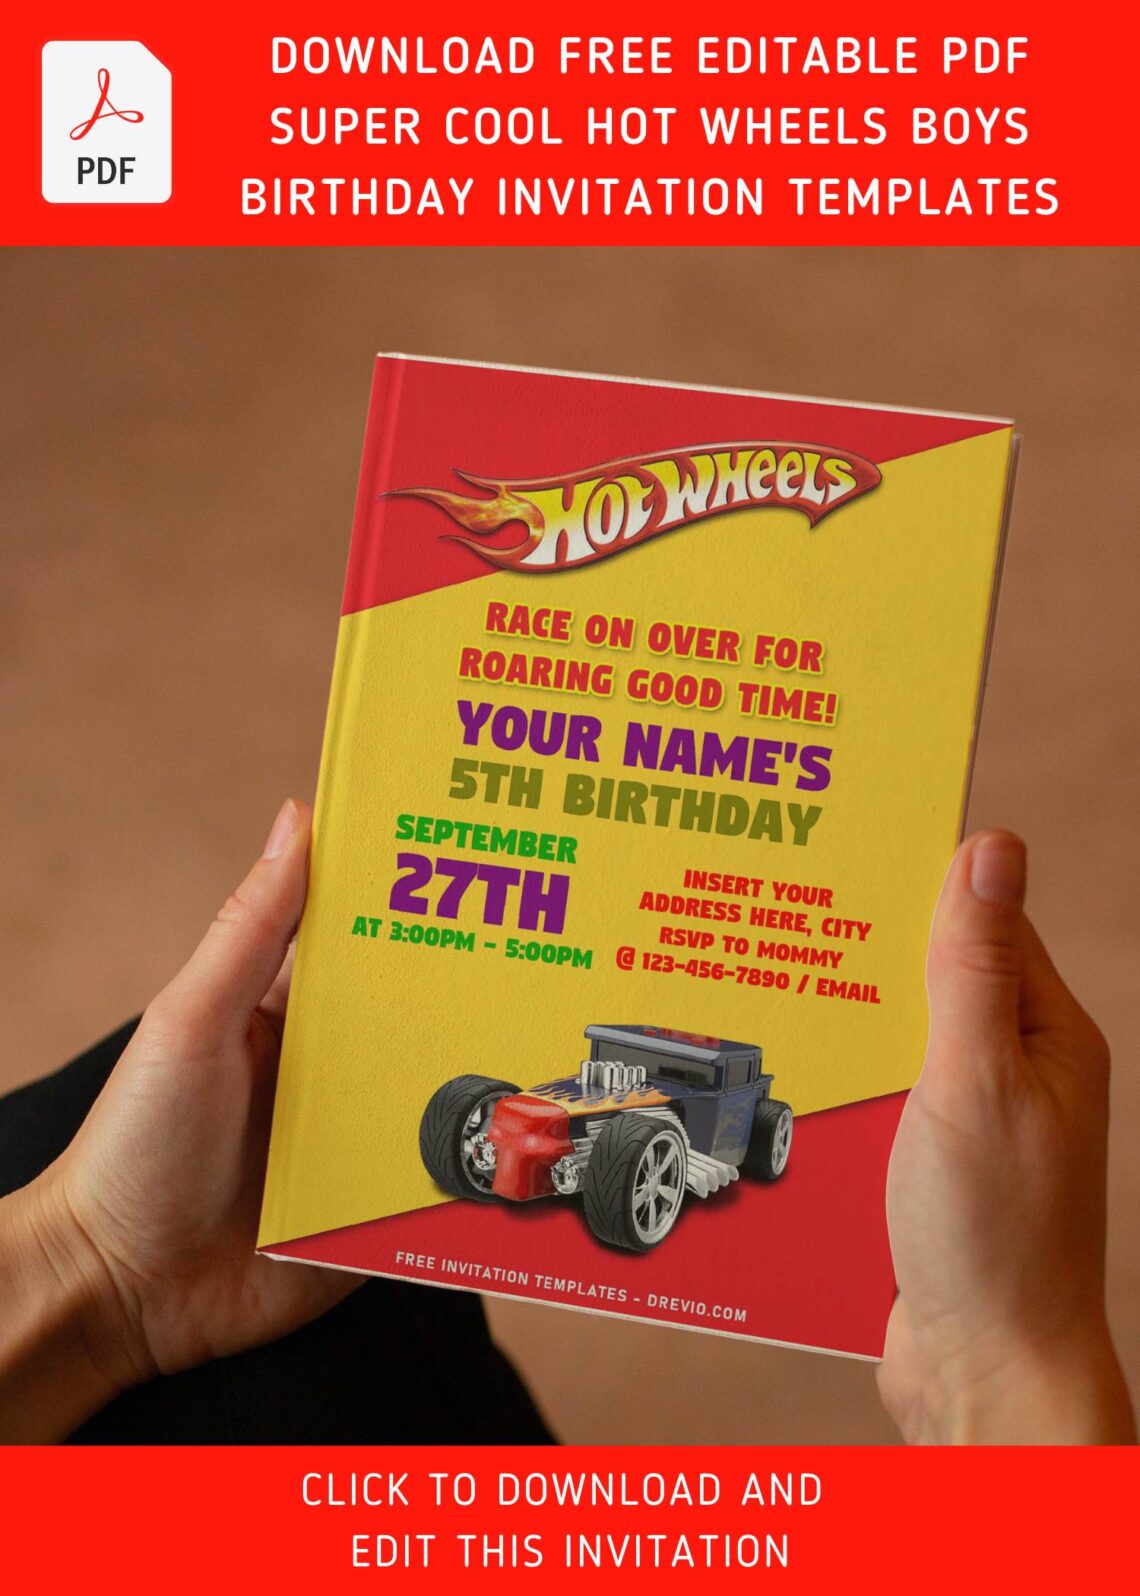 (Free Editable PDF) Ultimate Rush Hot Wheels Birthday Invitation Templates